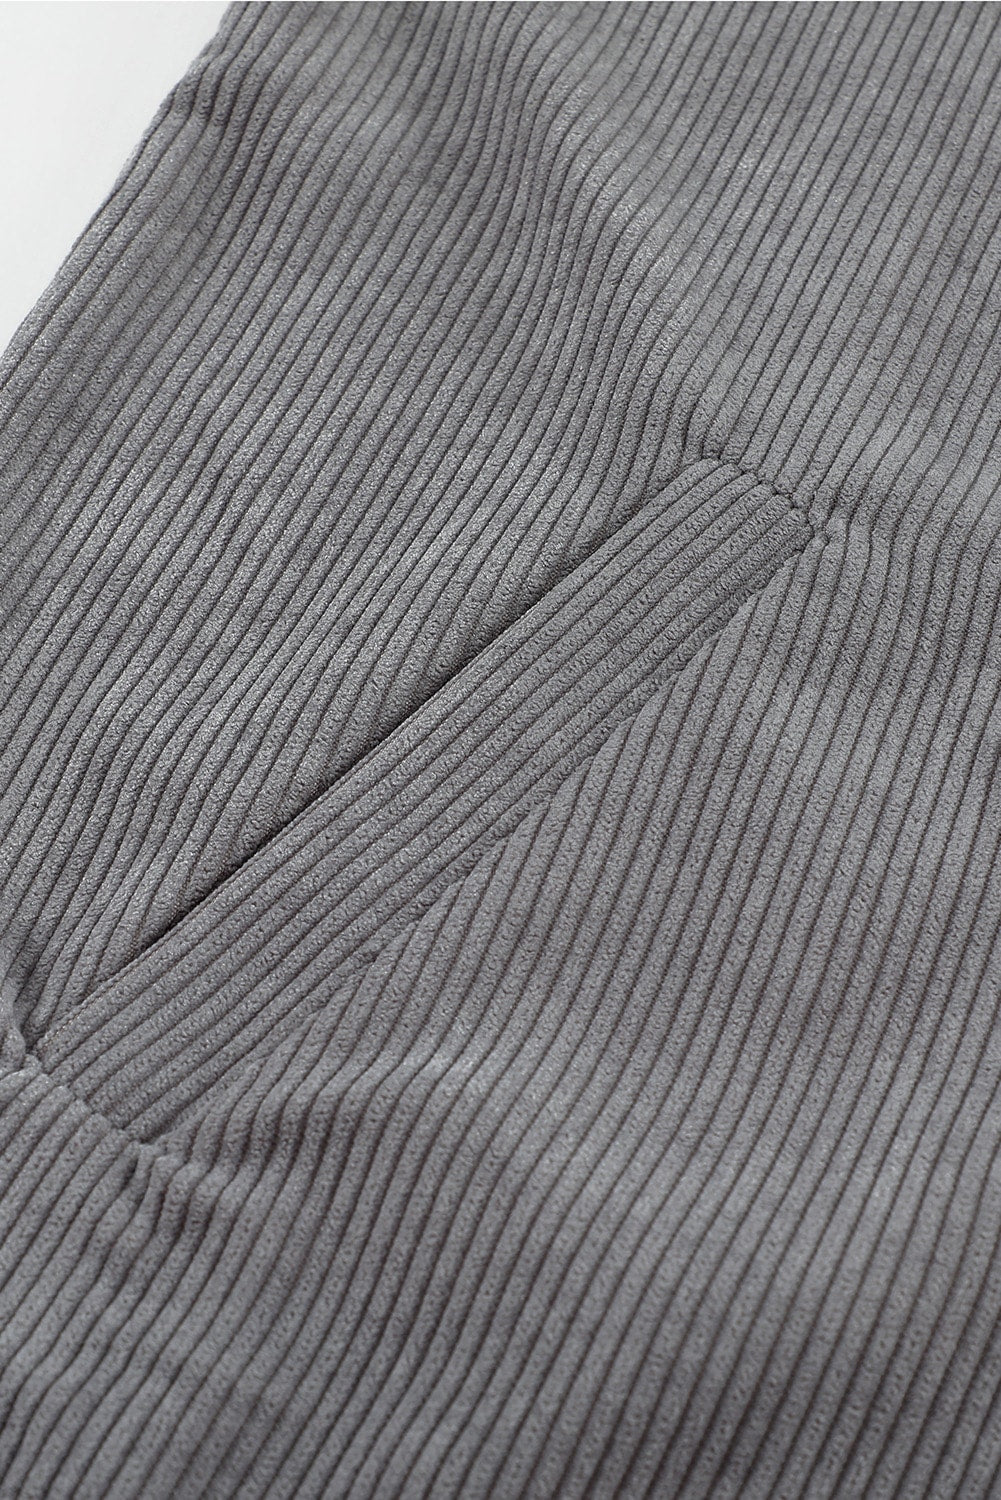 Gray Ribbed Corduroy Long Sleeve Jacket with Pocket